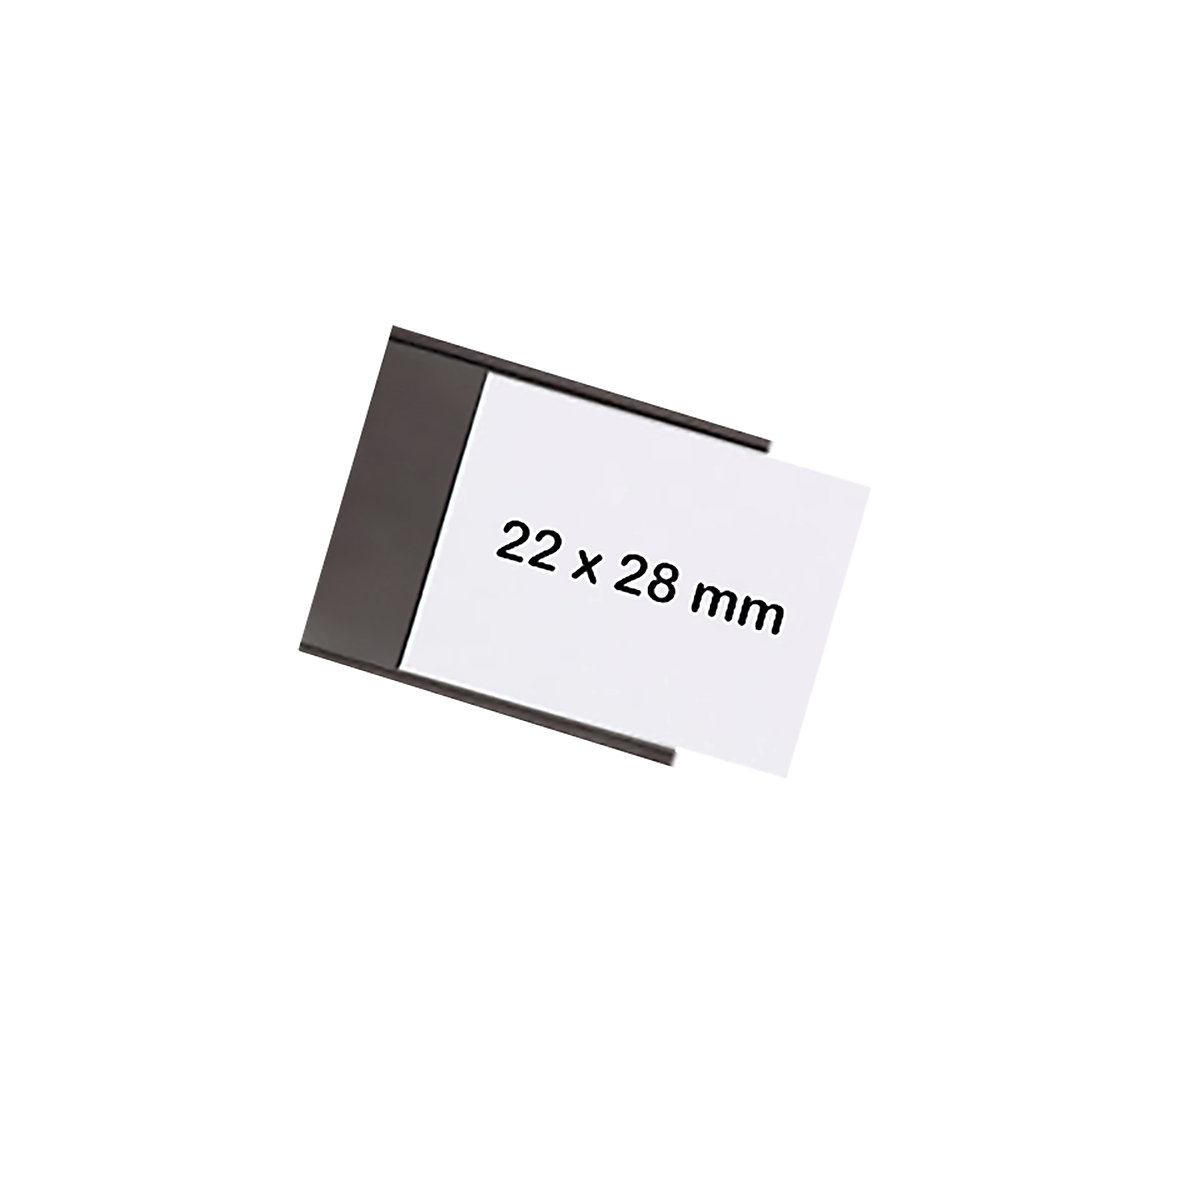 U-profil magnetoflex®, DE 30 kosov – magnetoplan